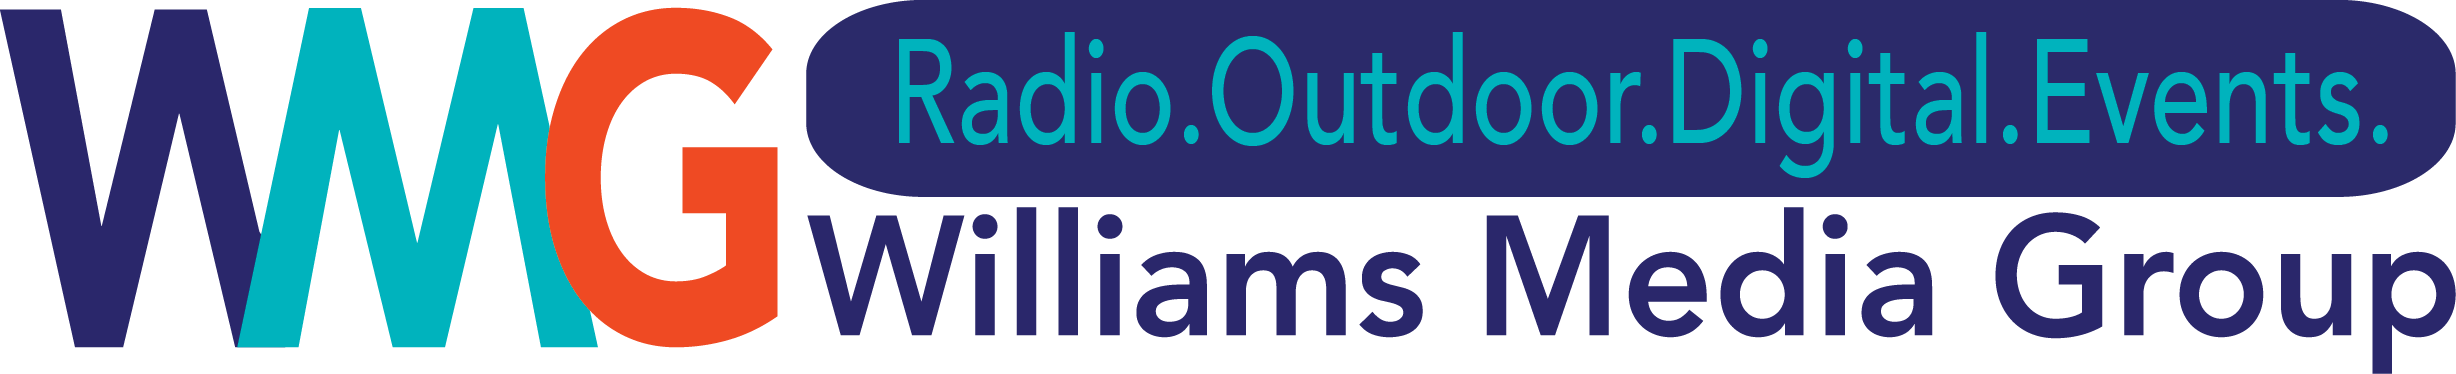 Williams Media Group logo